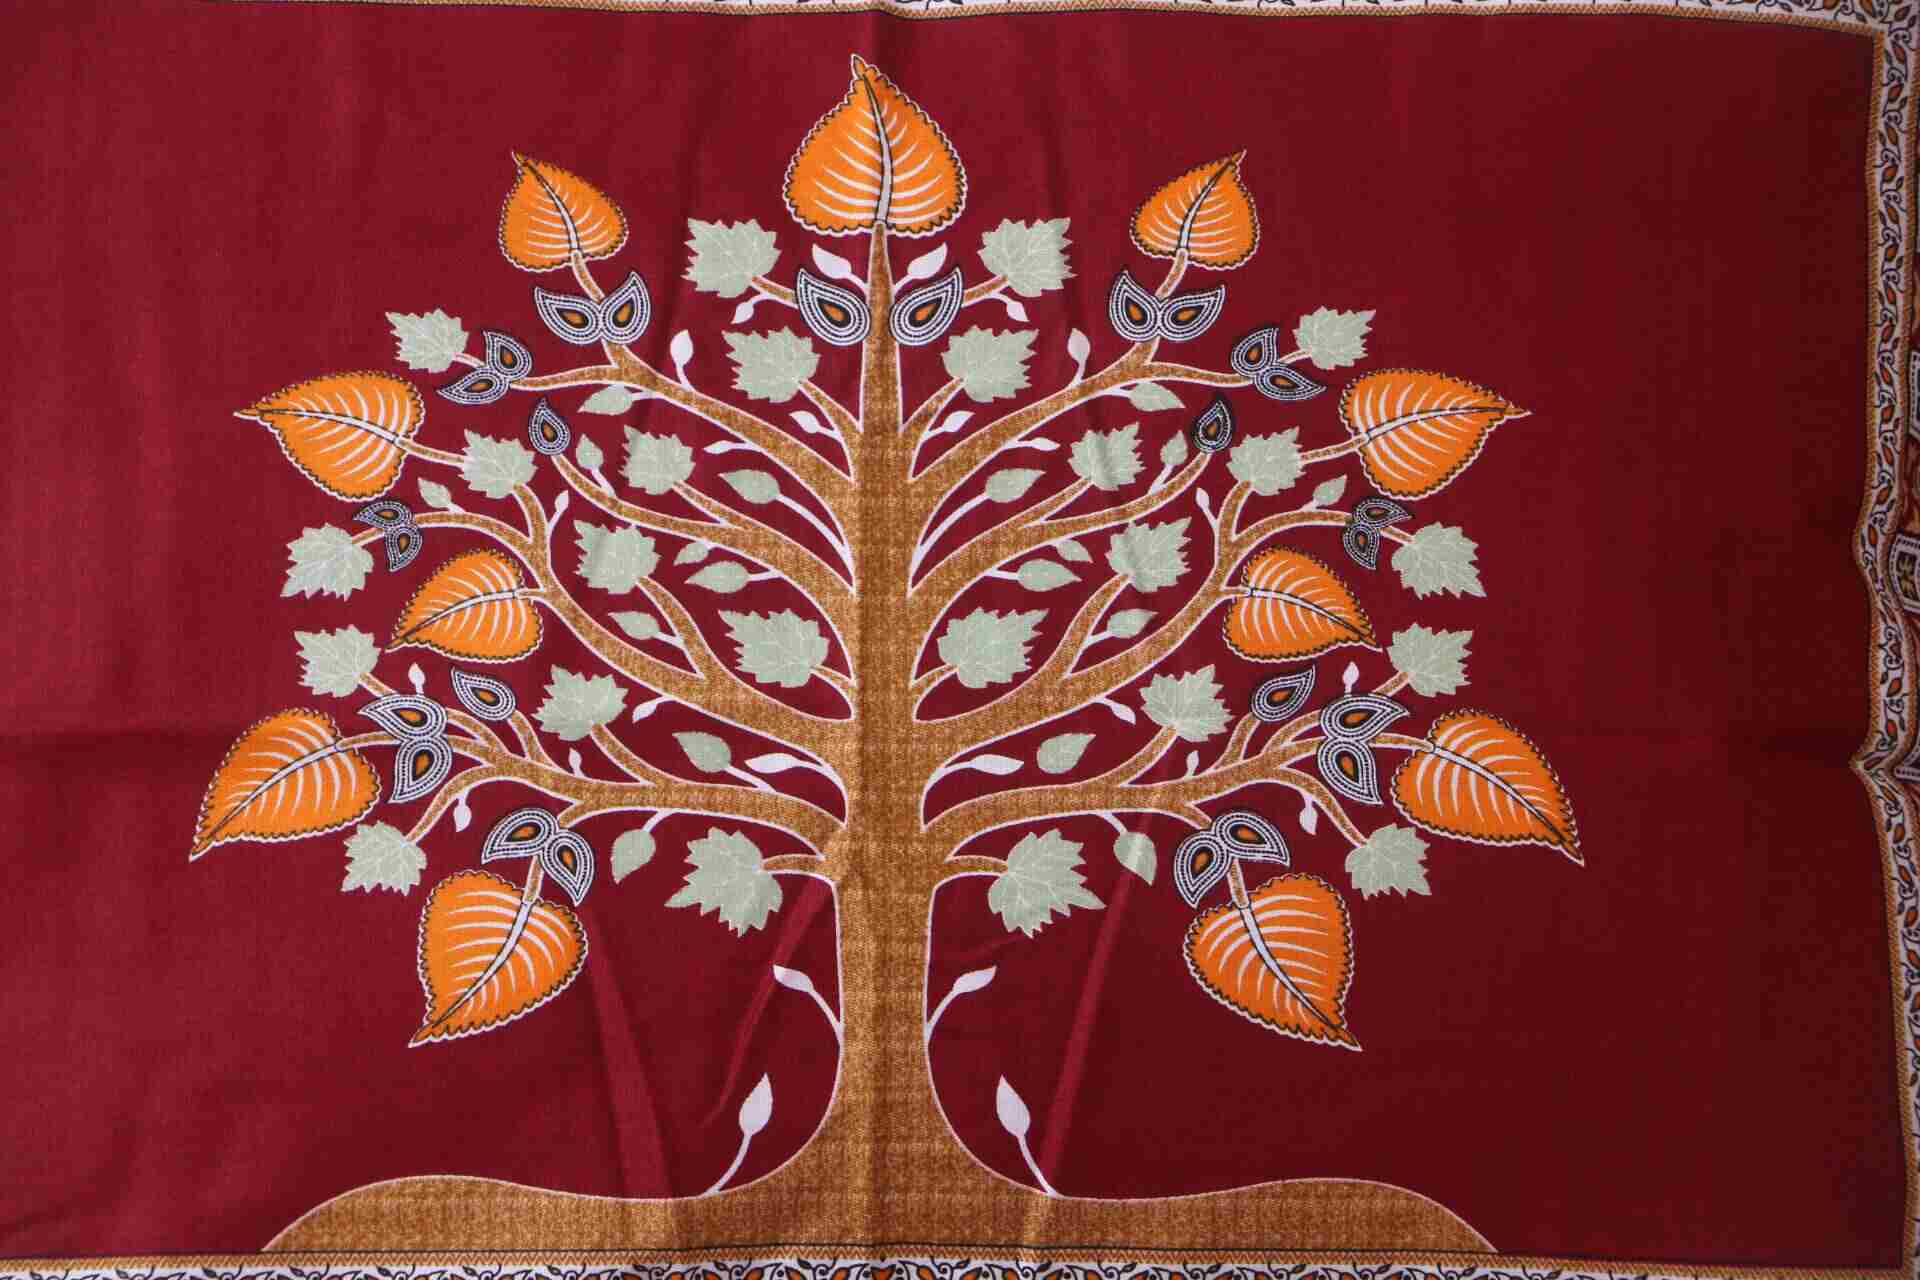 100% Cotton King Size Bedsheet (Marun Color Big Tree)  (৩ পিসের সেট)